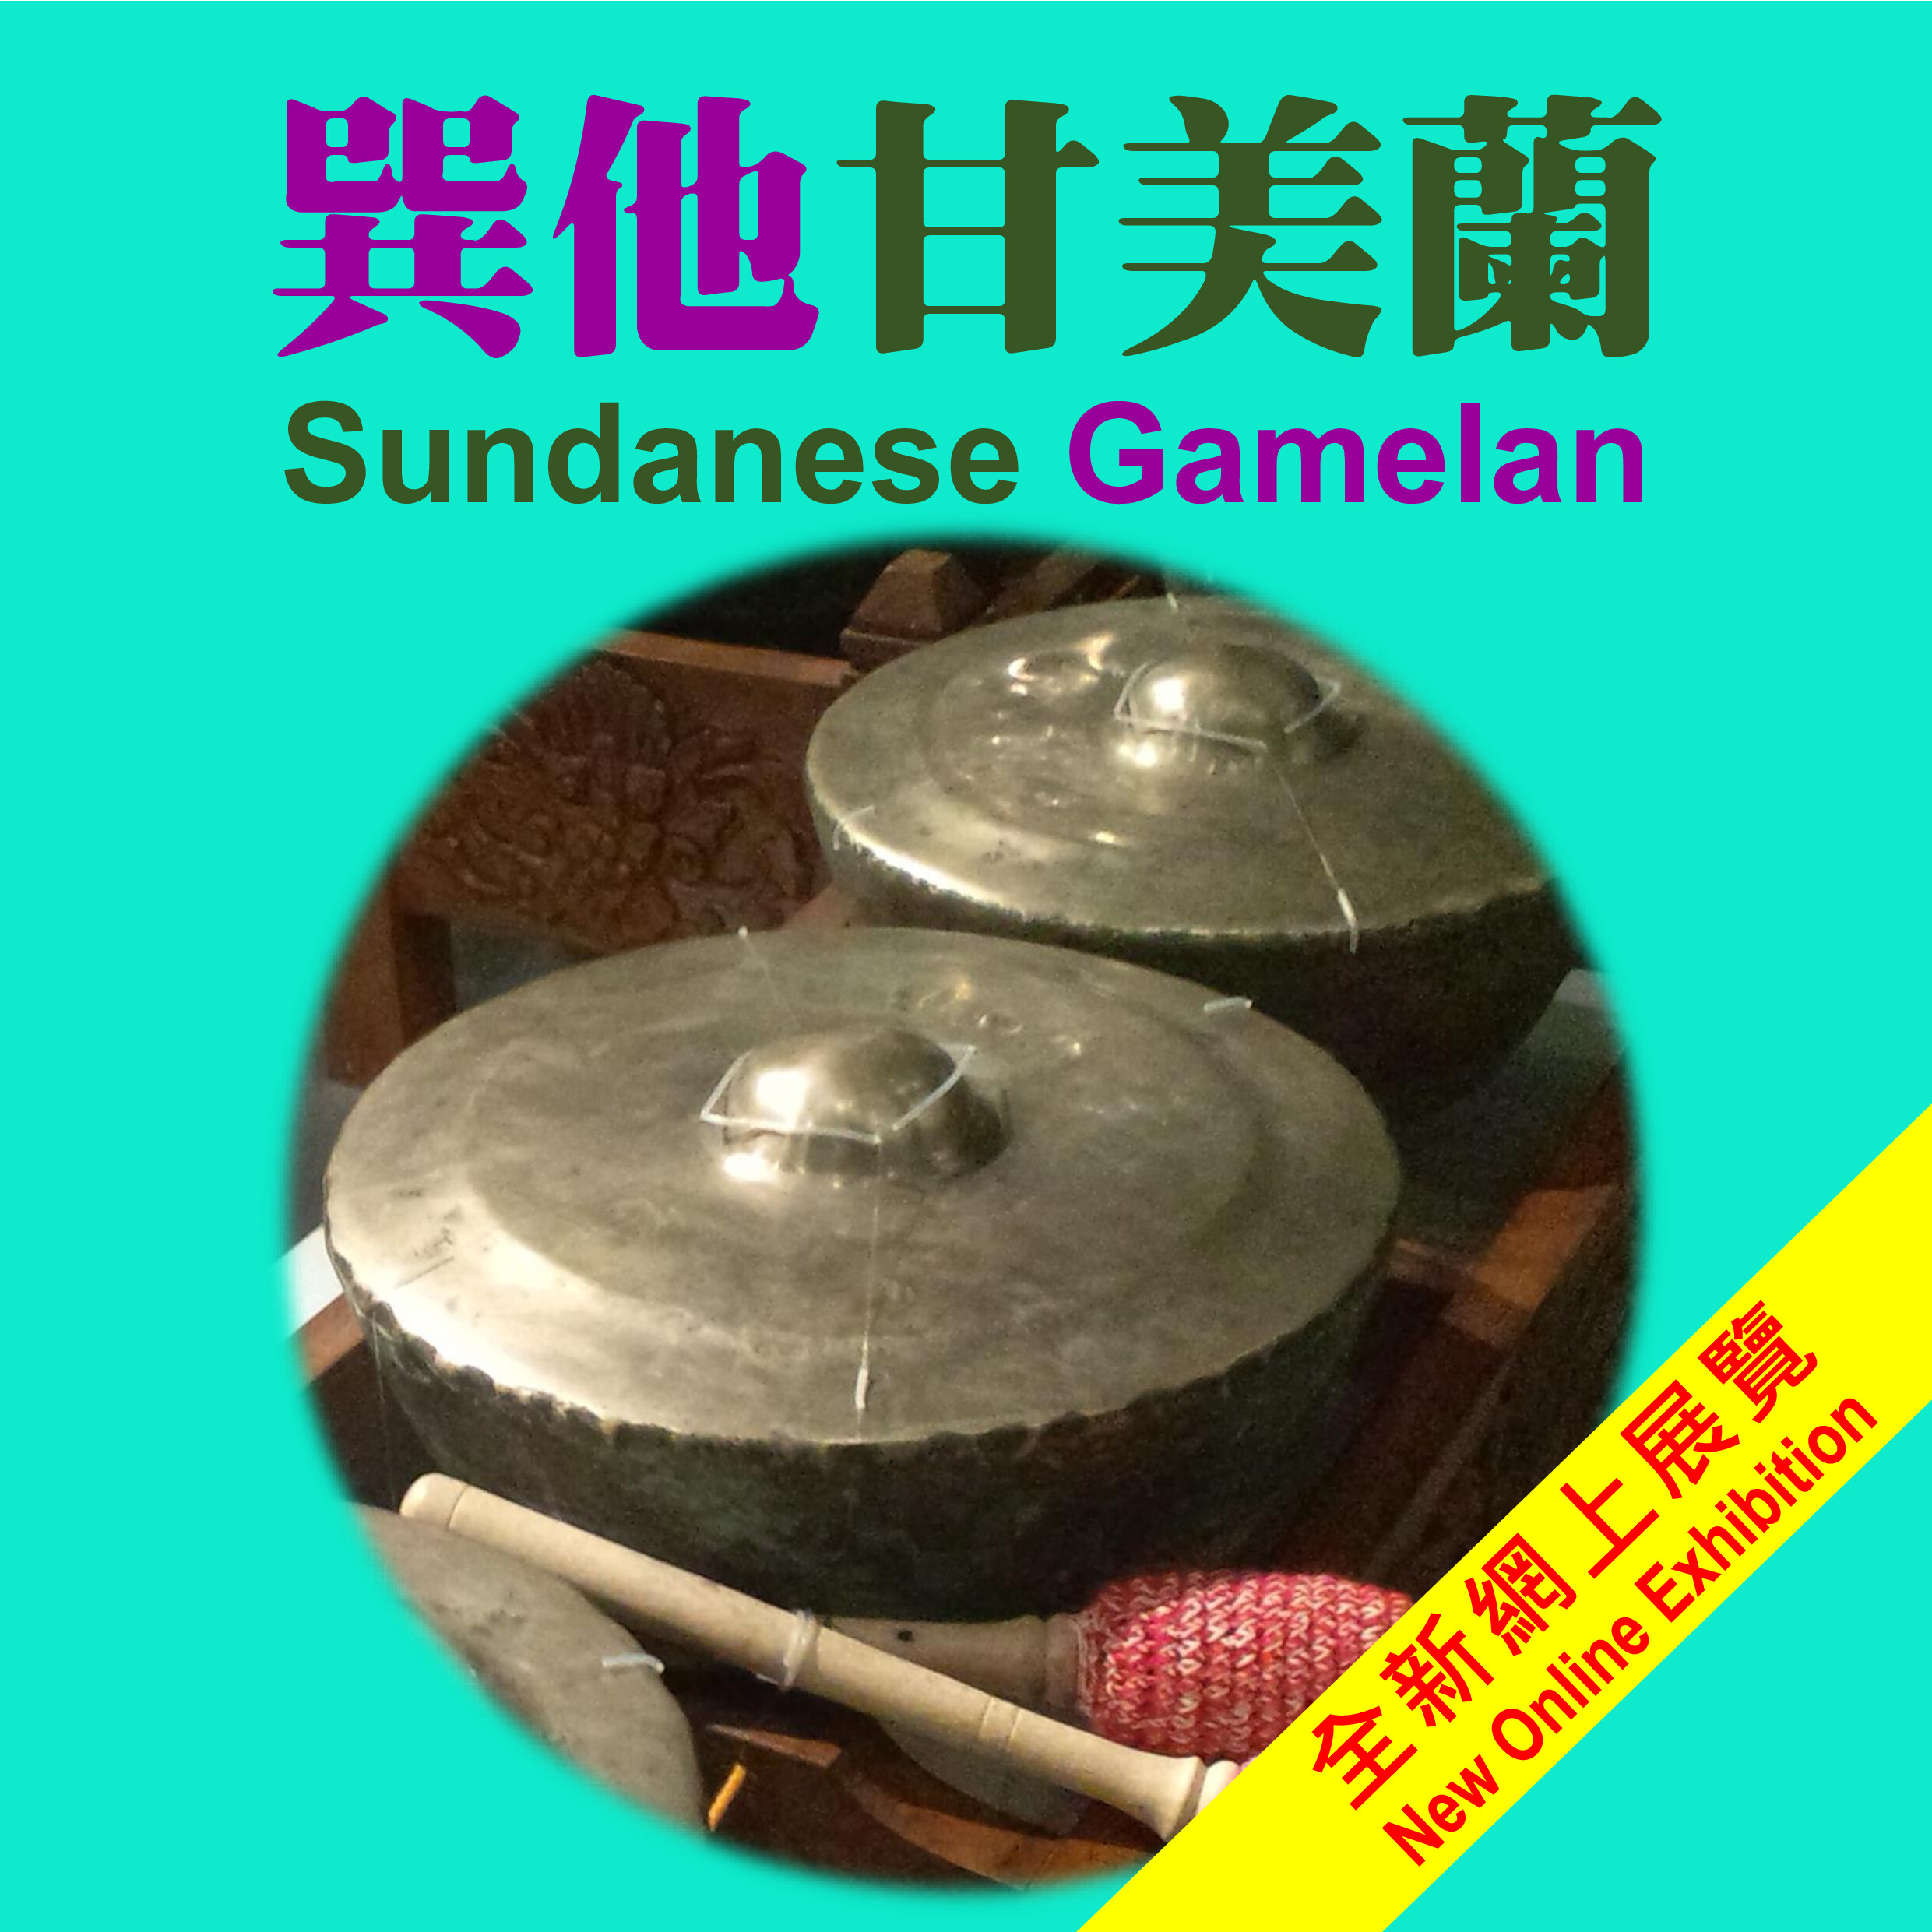 Music Exhibition - Sundanese Gamelan